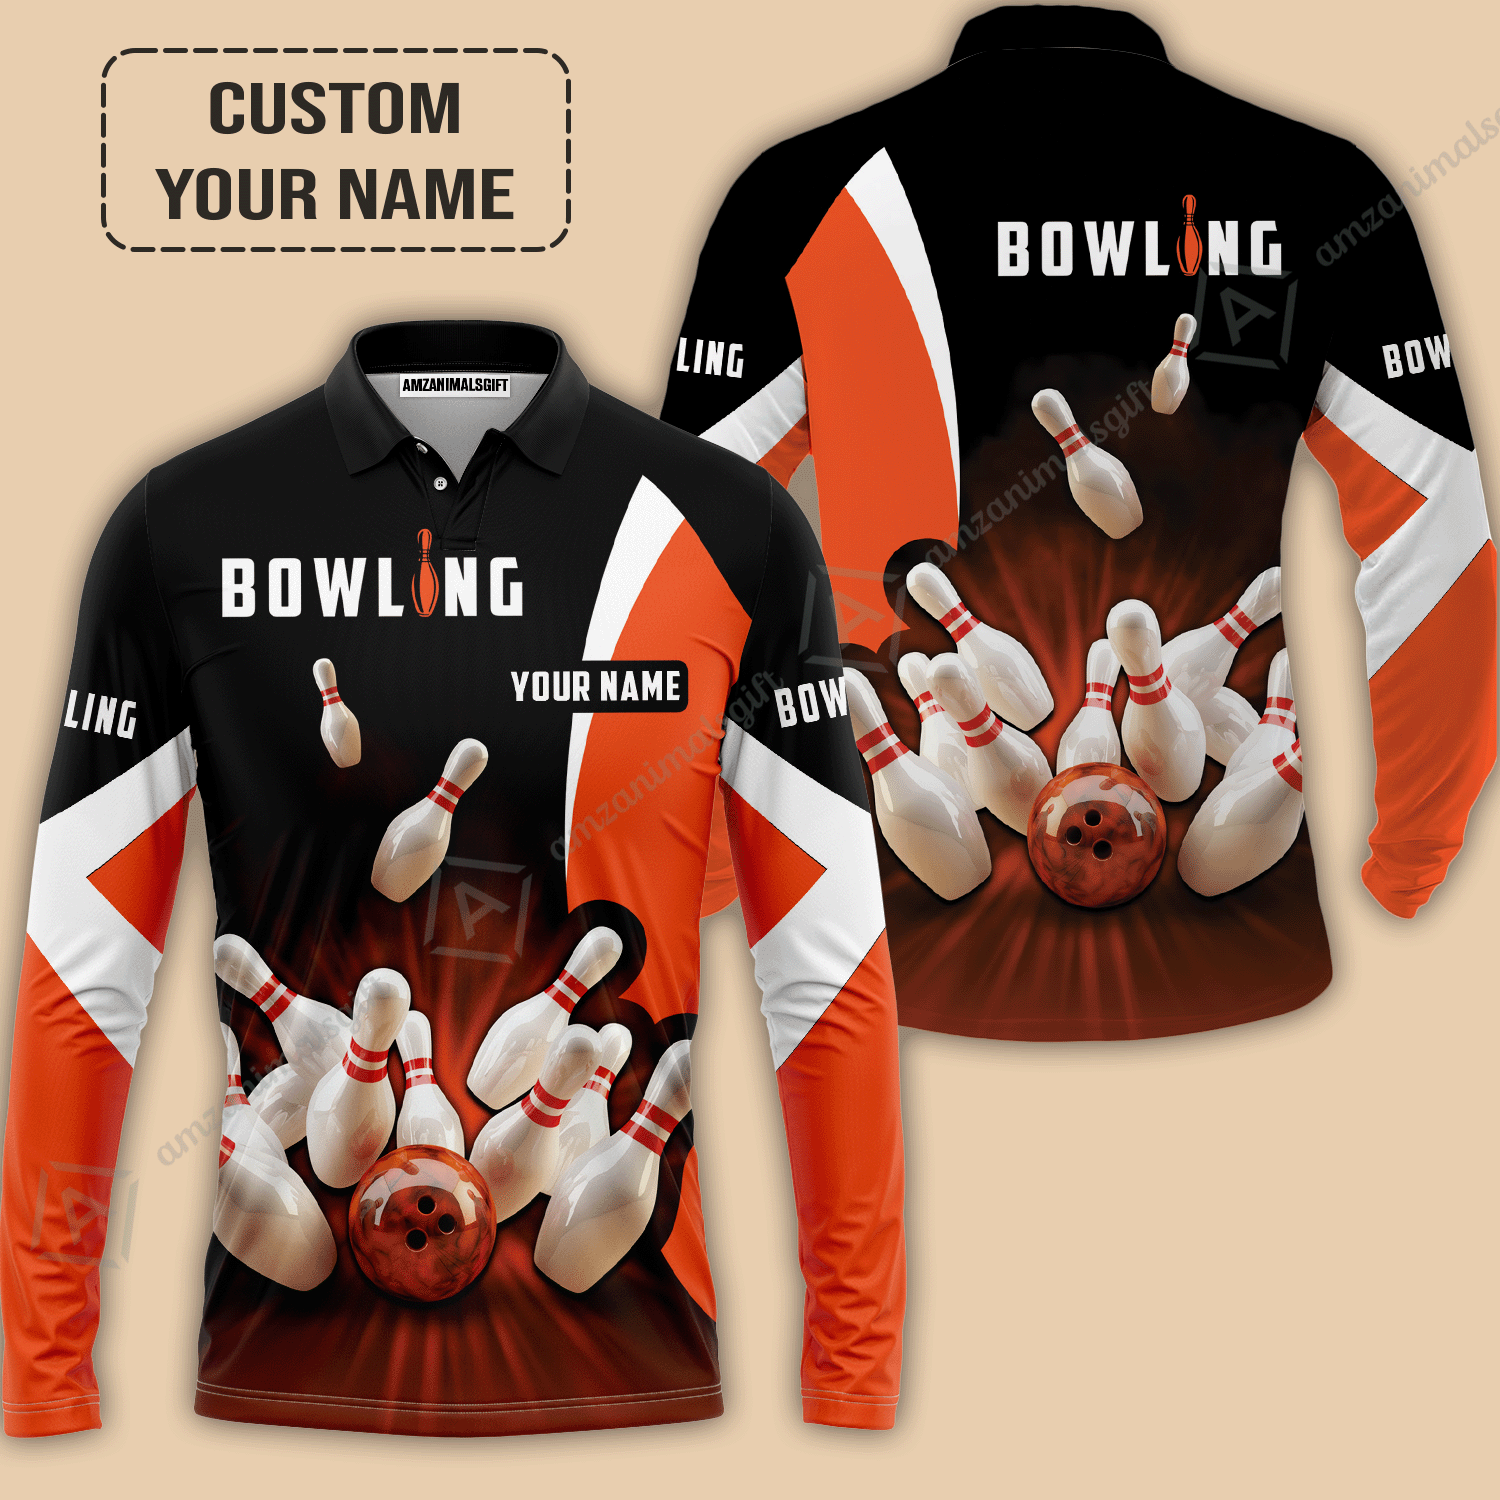 Customized Bowling Long Polo Shirt, Ten Pin Strike Bowling Personalized Orange Black Shirt For Friend, Family, Bowling Players